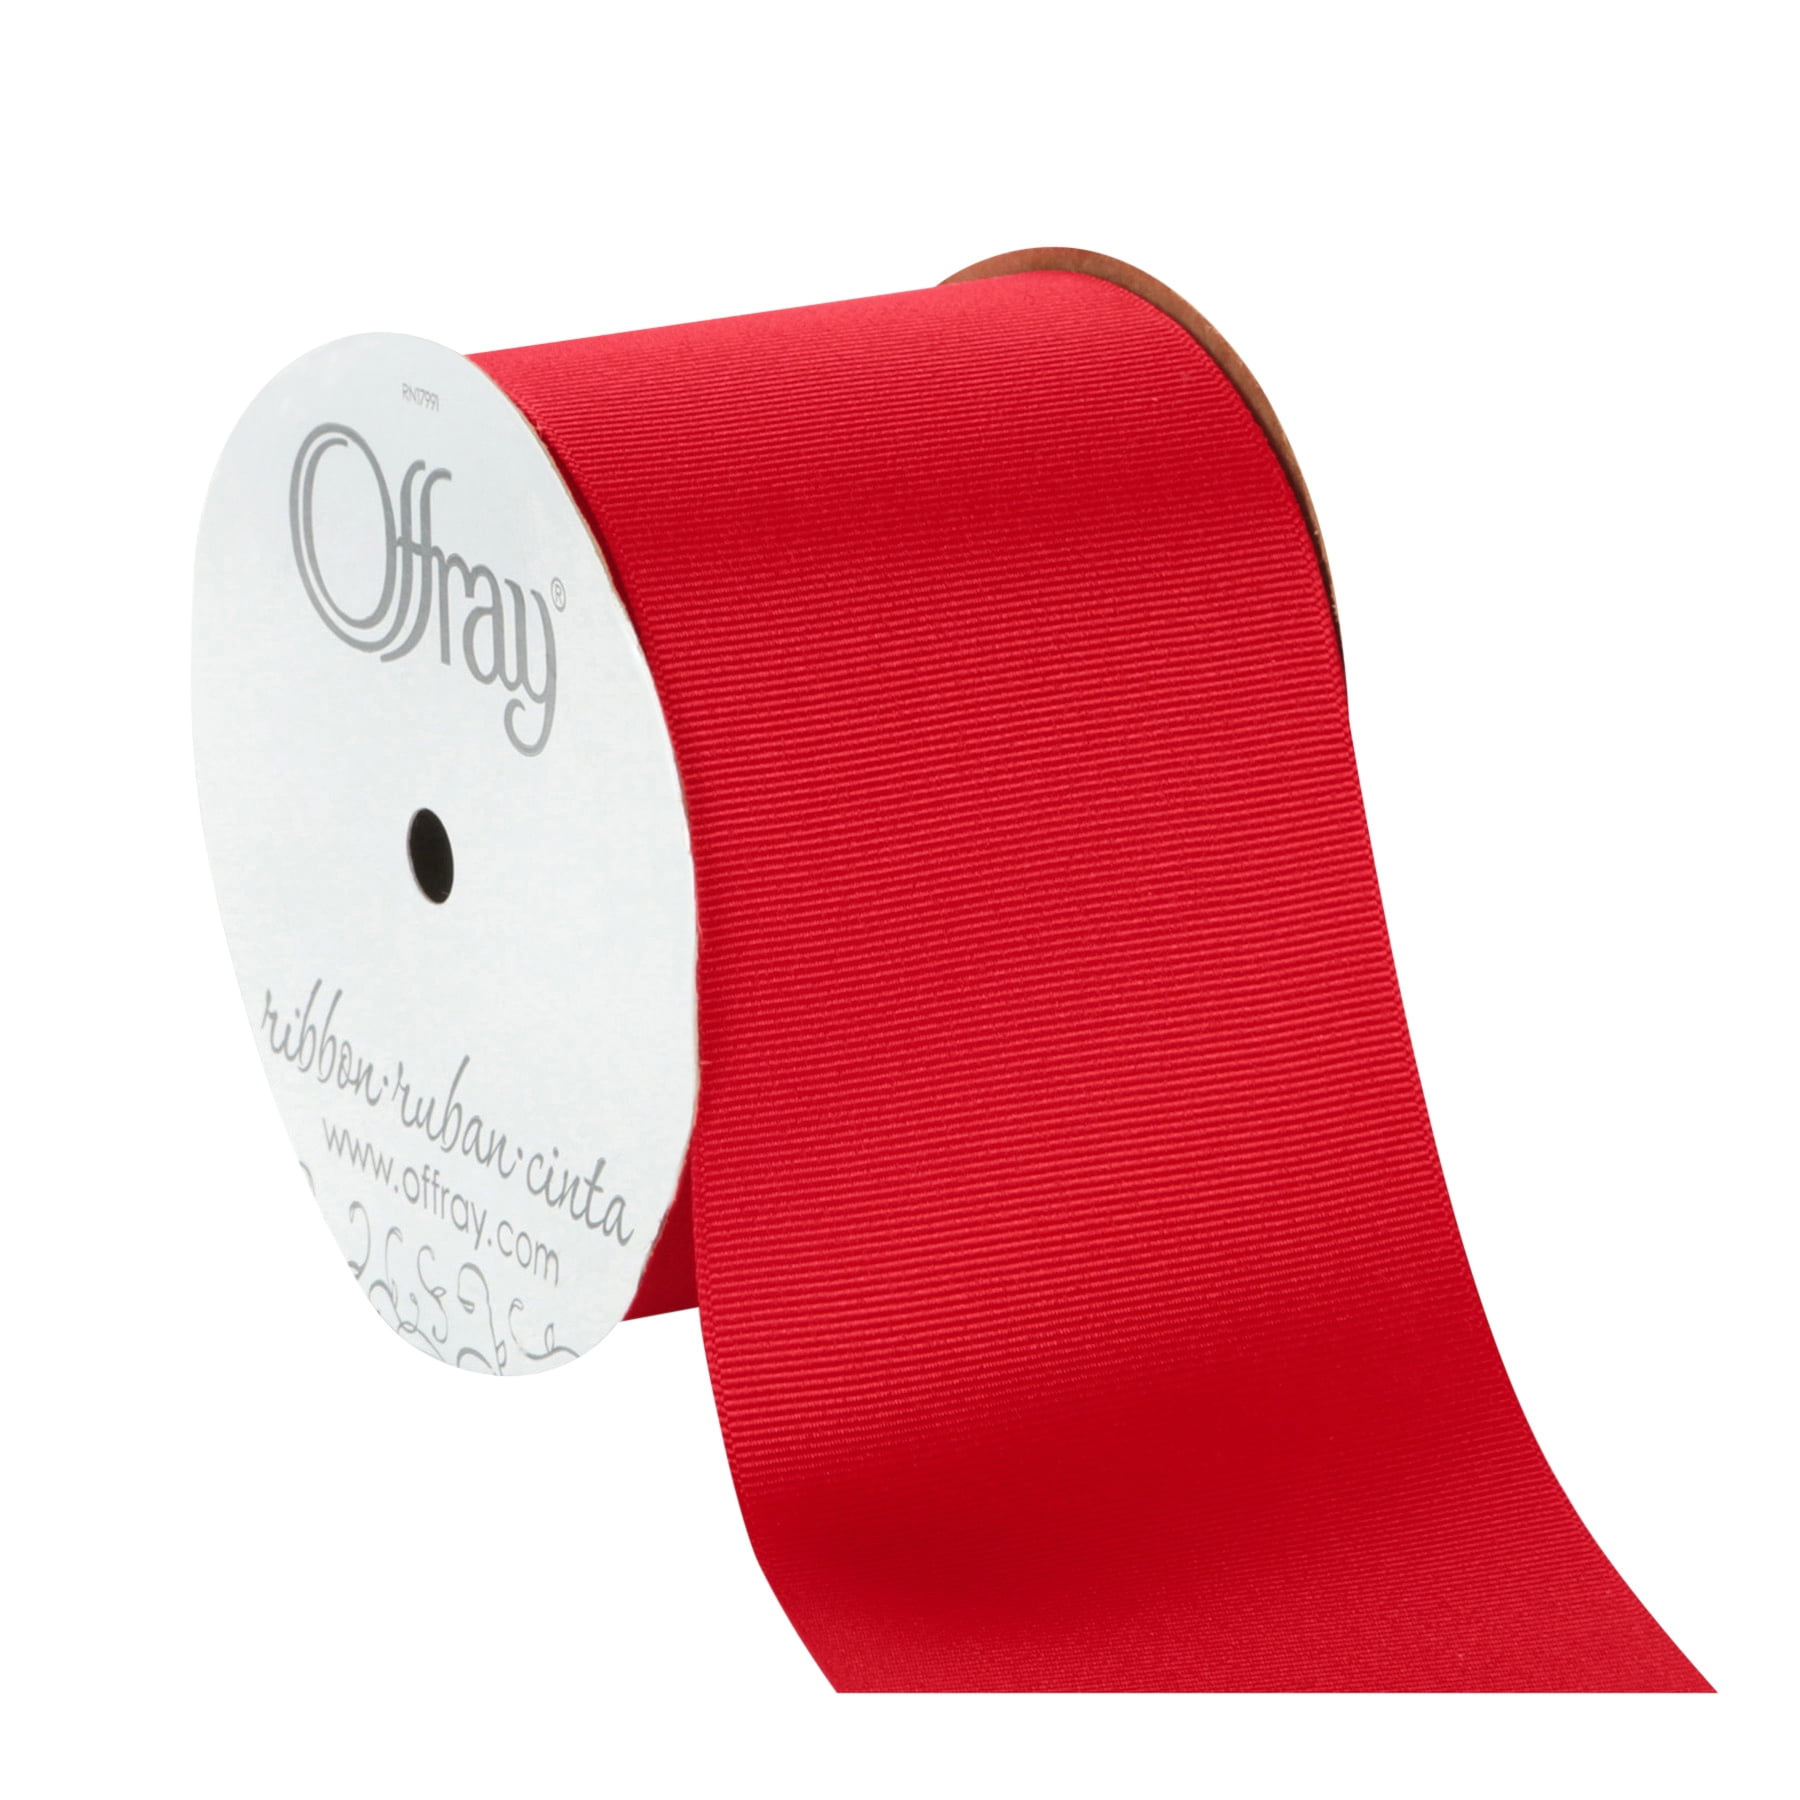 Offray Ribbon, Red 3 inch Grosgrain Polyester Ribbon, 9 feet